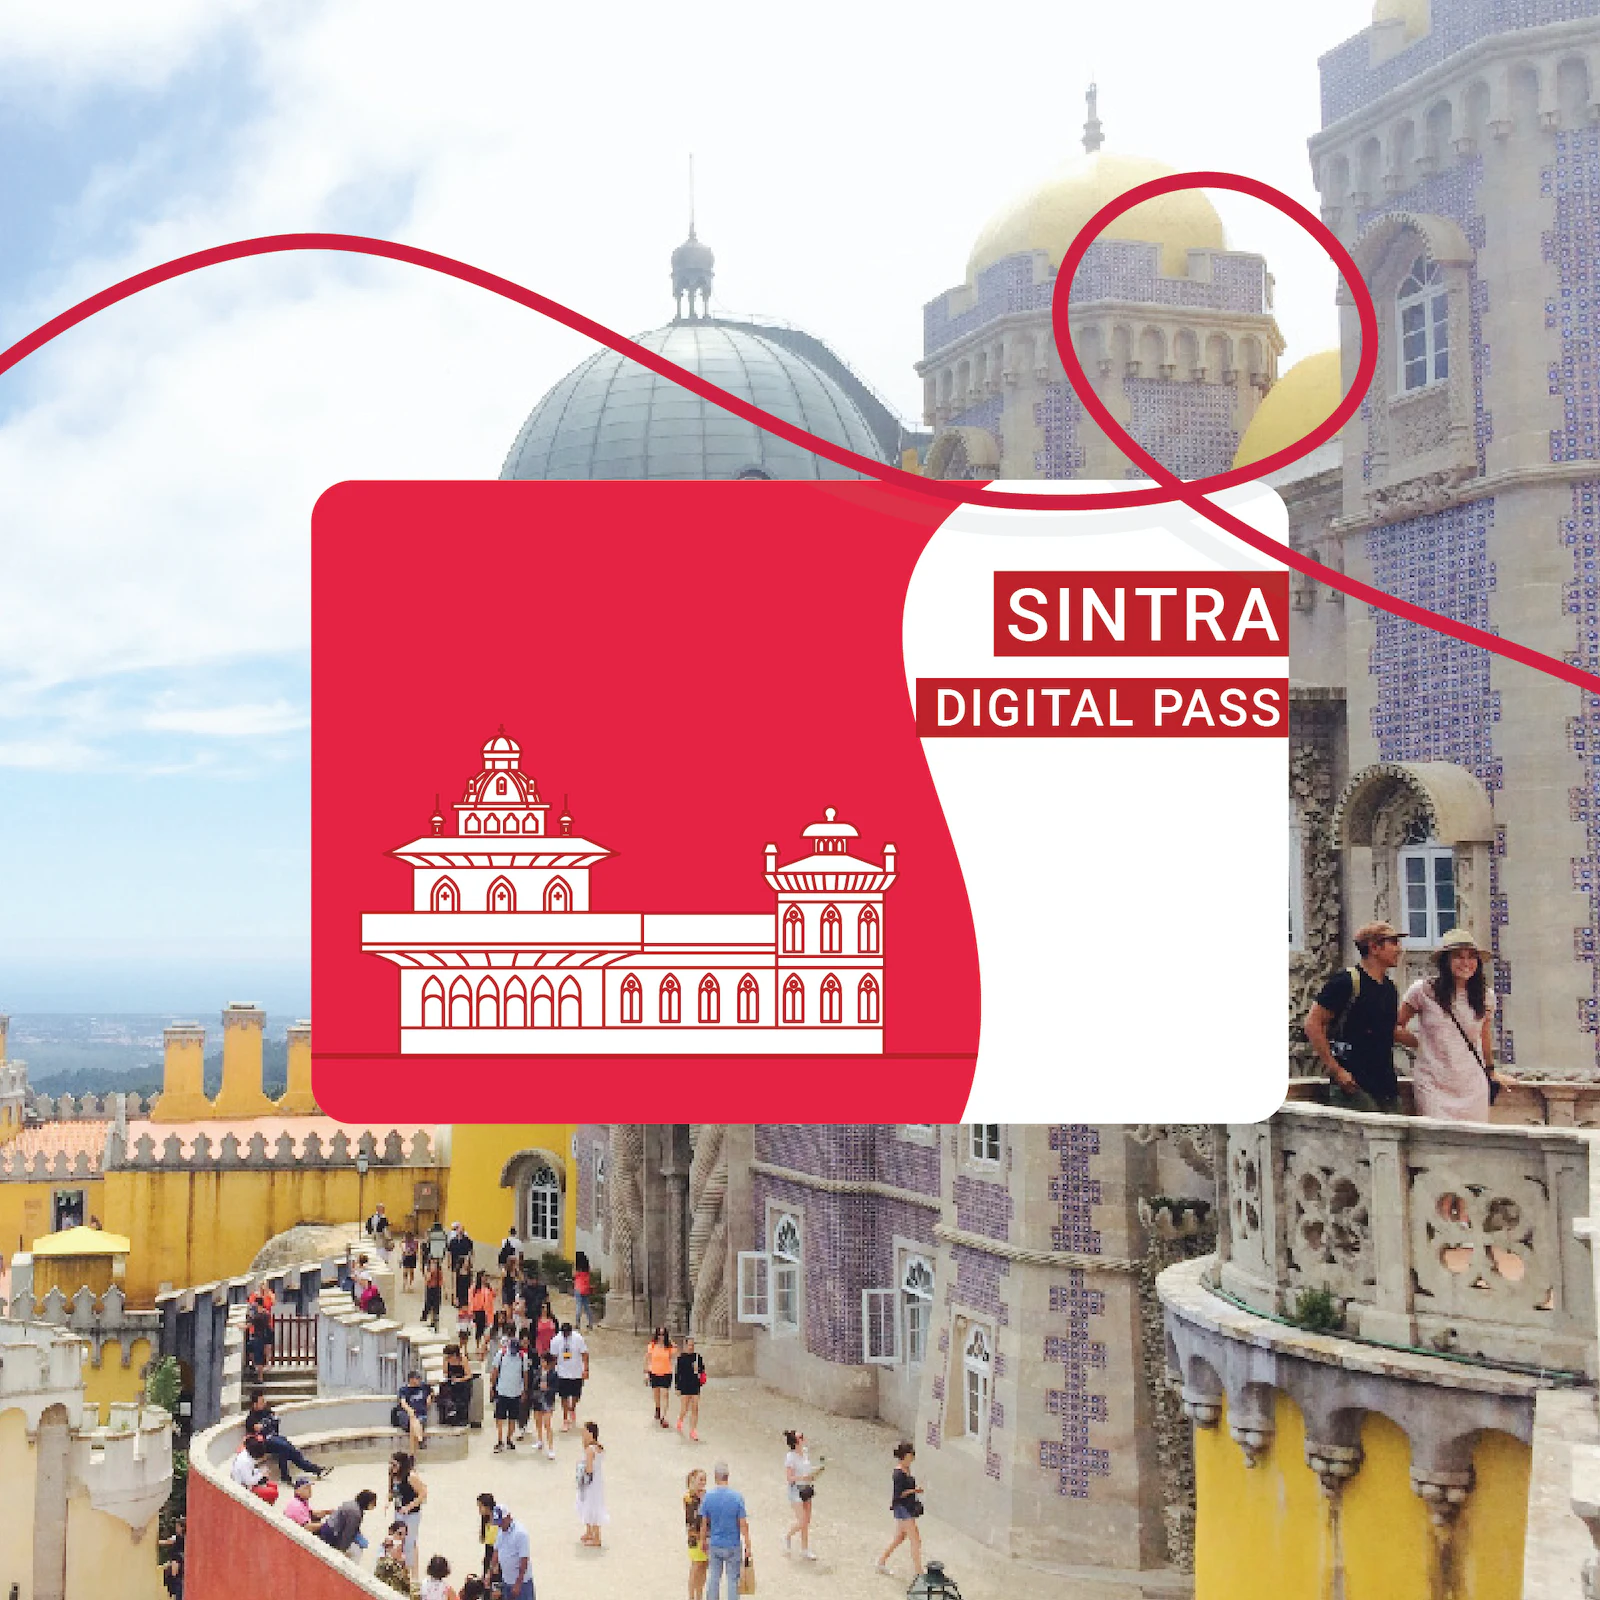 Sintra digital pass